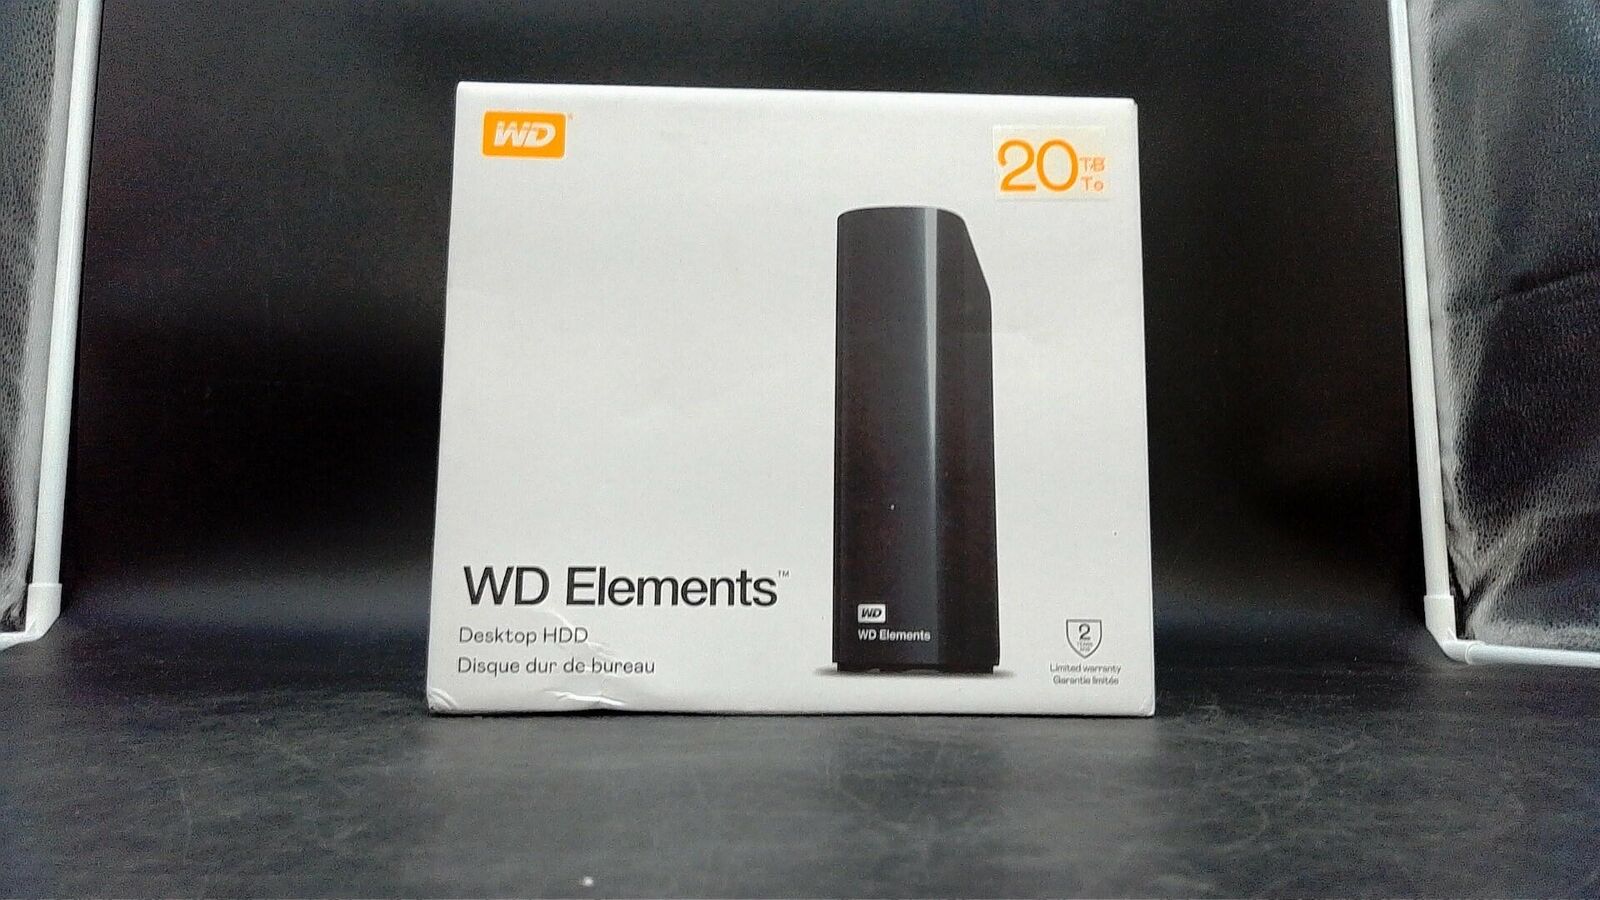 Western Digital 20TB Elements Desktop External Hard Drive, USB 3.0 drive